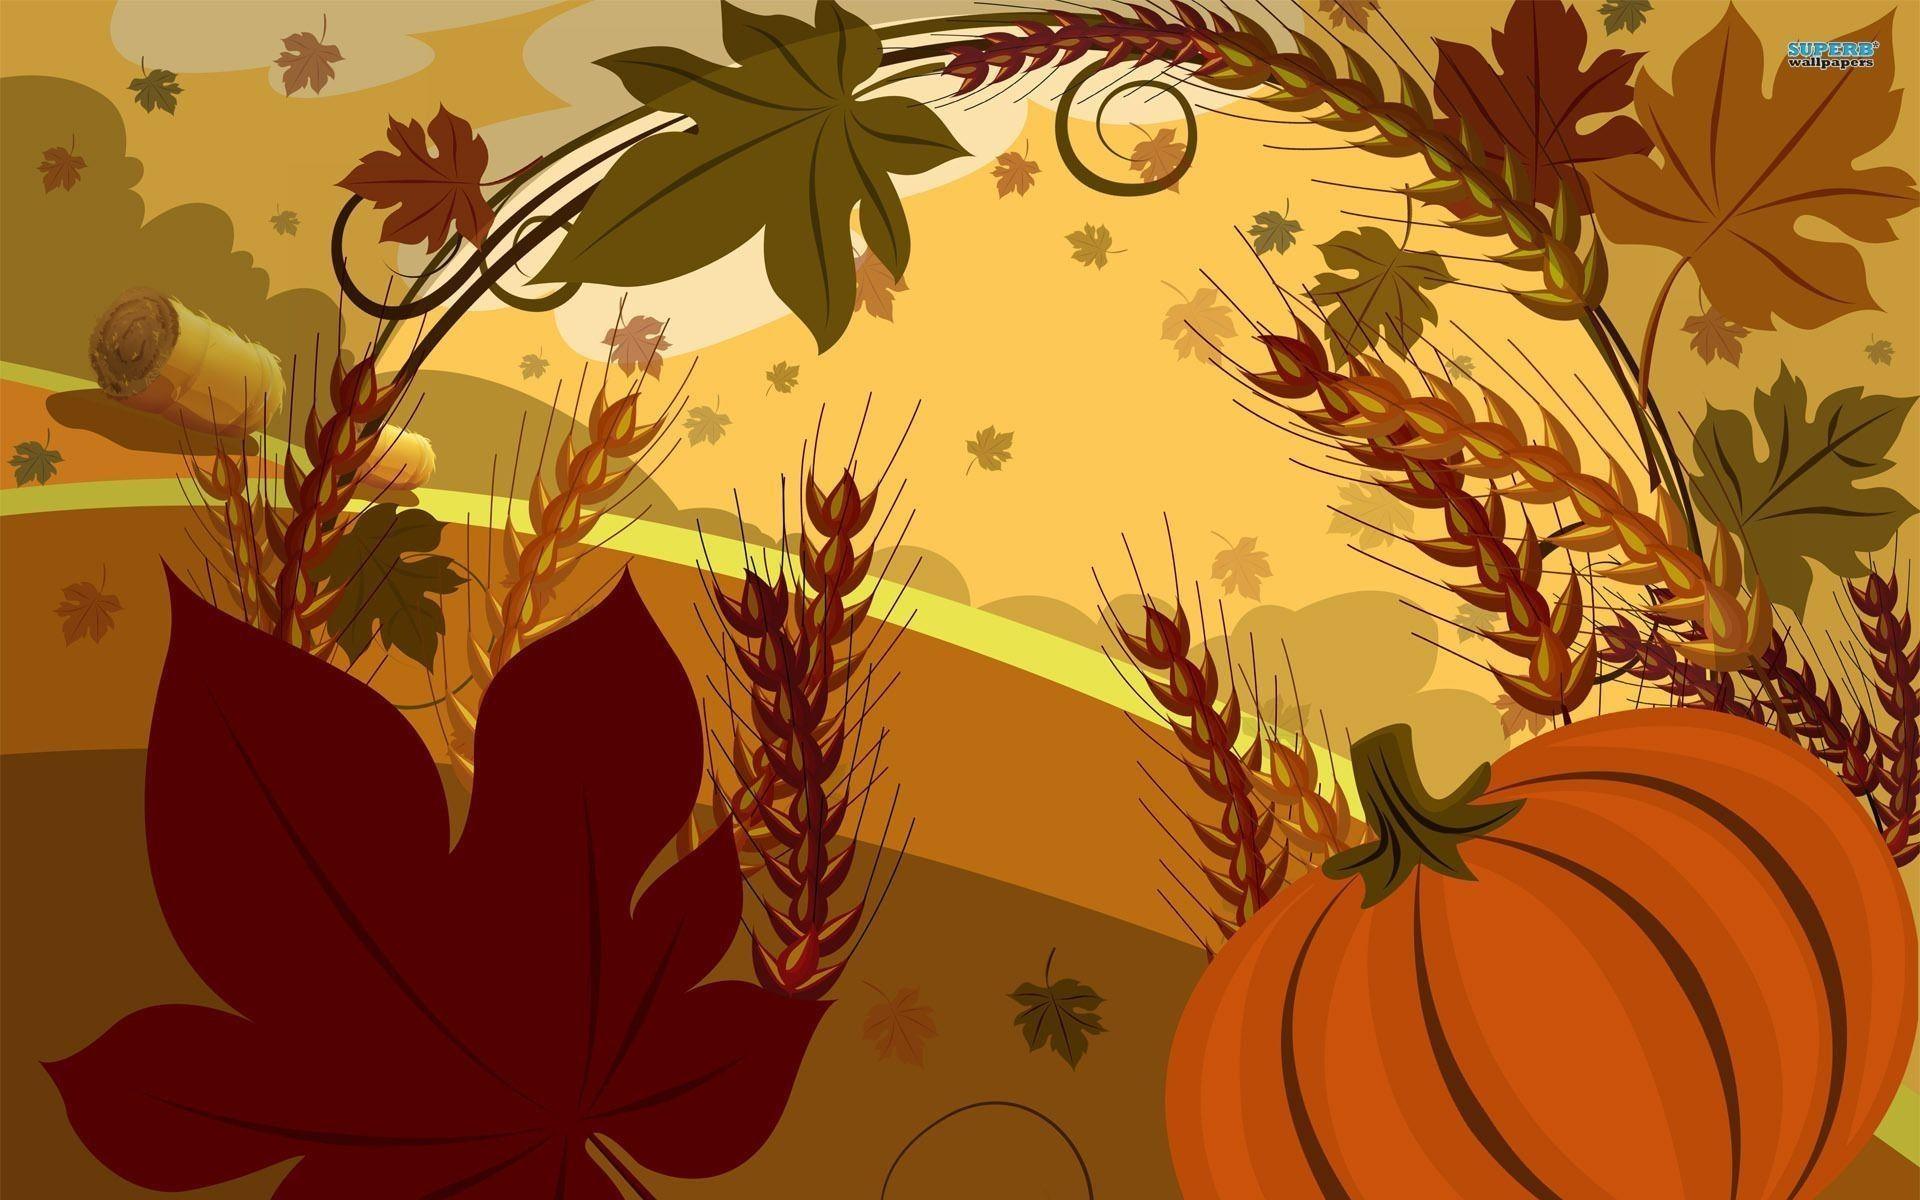 Cute Thanksgiving wallpaperDownload free stunning background